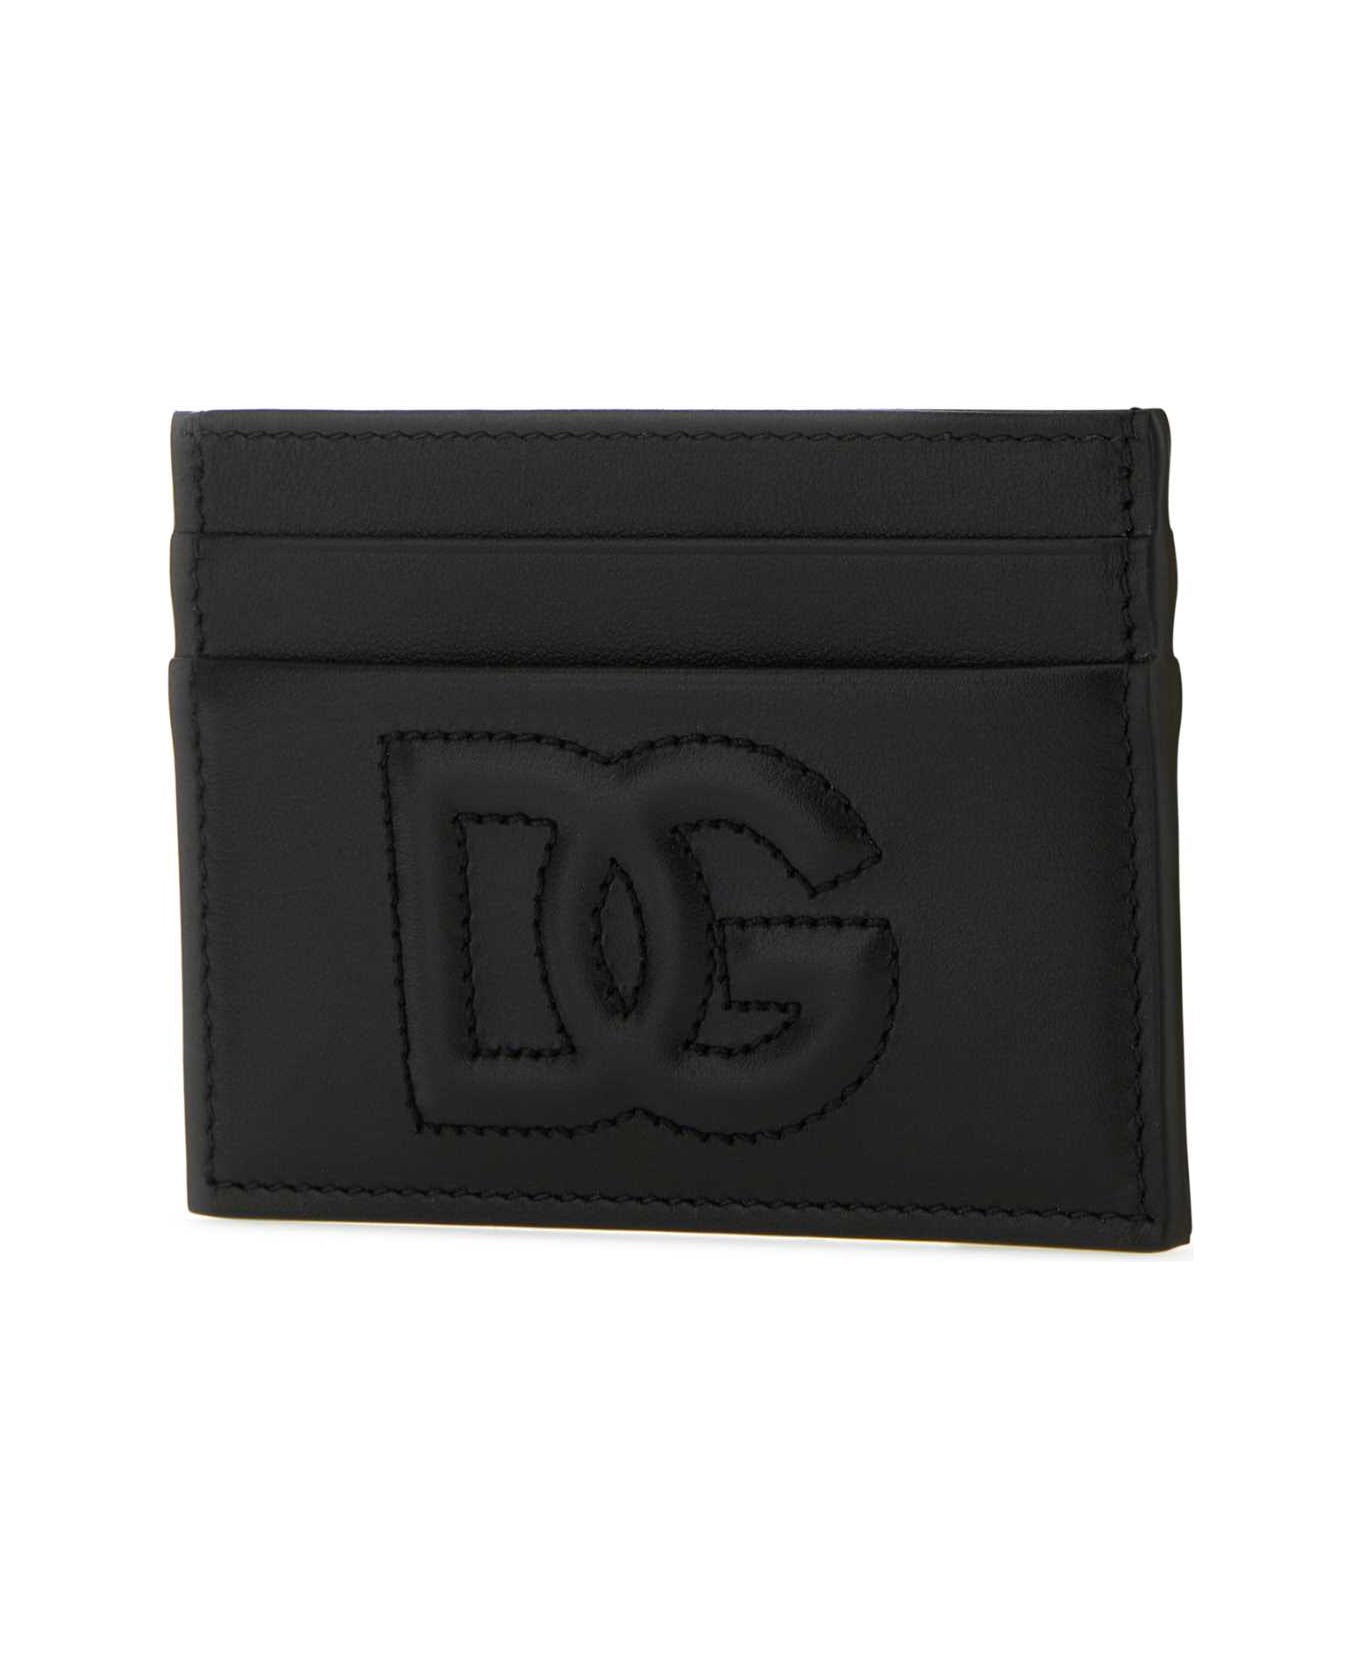 Dolce & Gabbana Black Leather Card Holder - Black